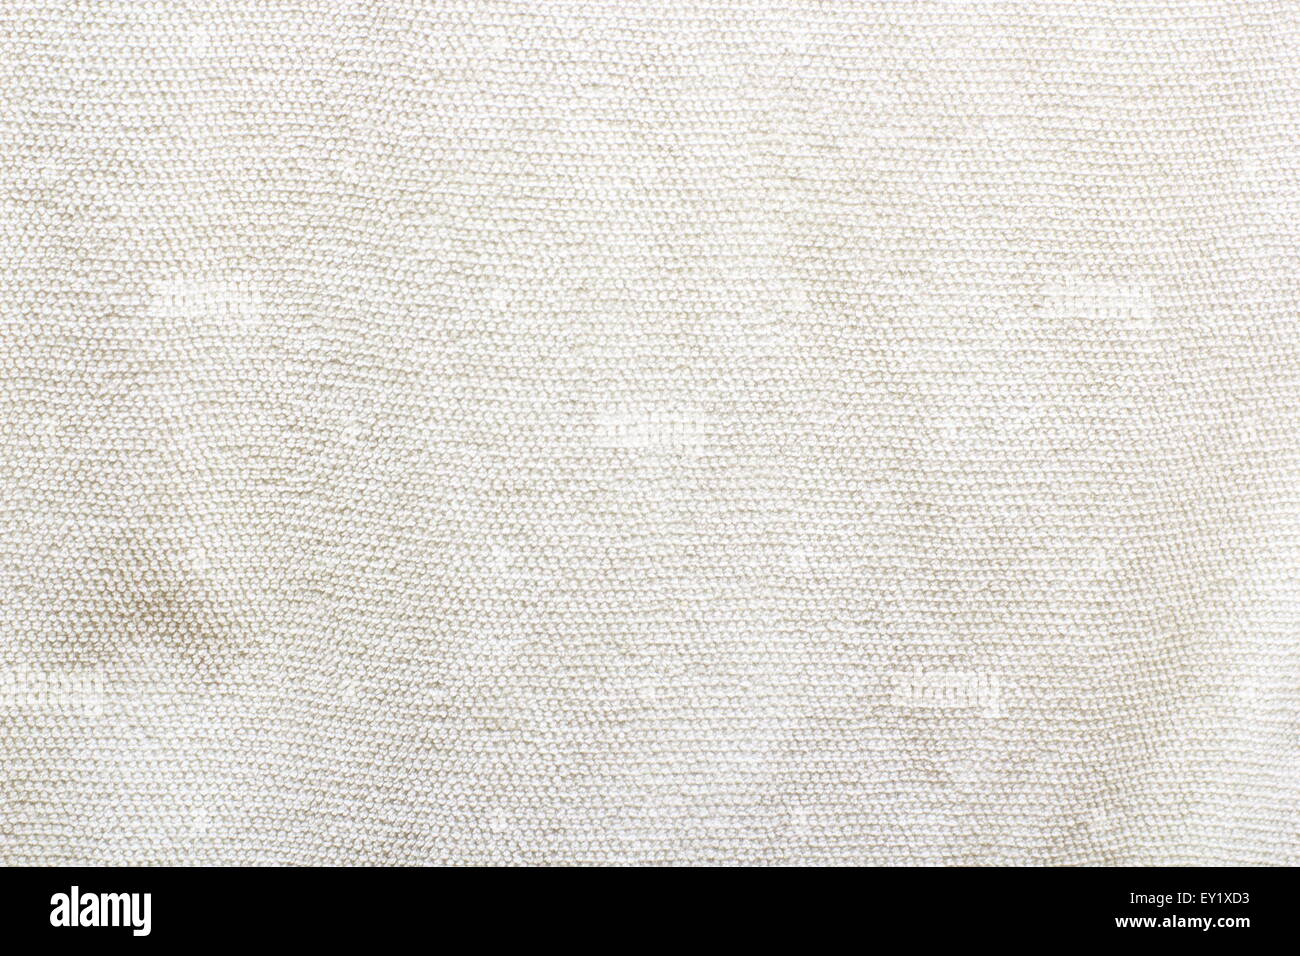 detailed texture of cotton white towel Stock Photo